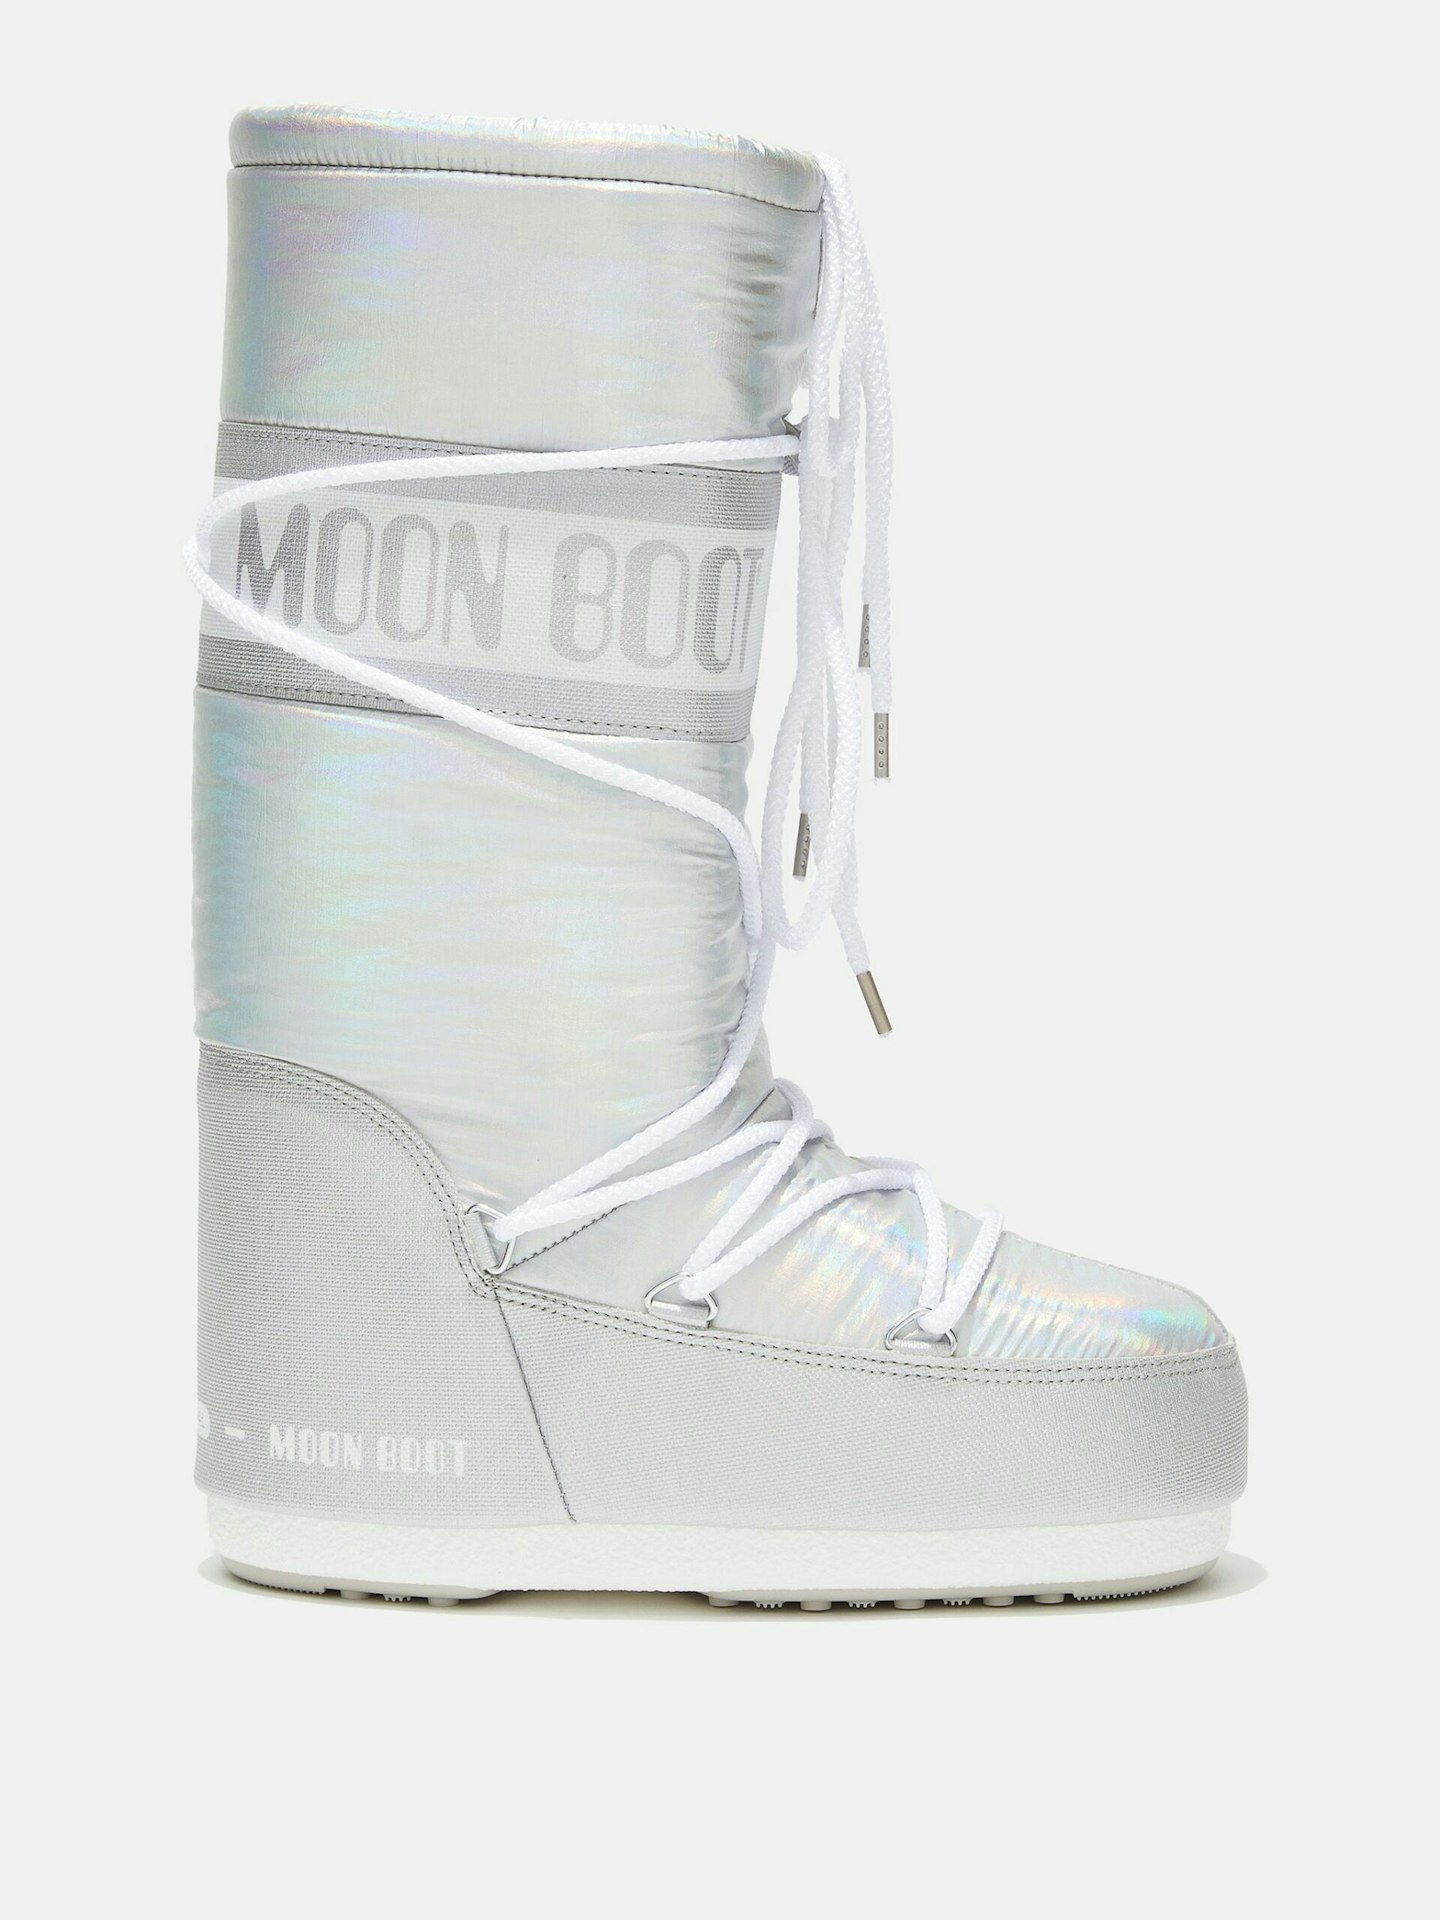 Moon Boot, Icon Metallic Boots